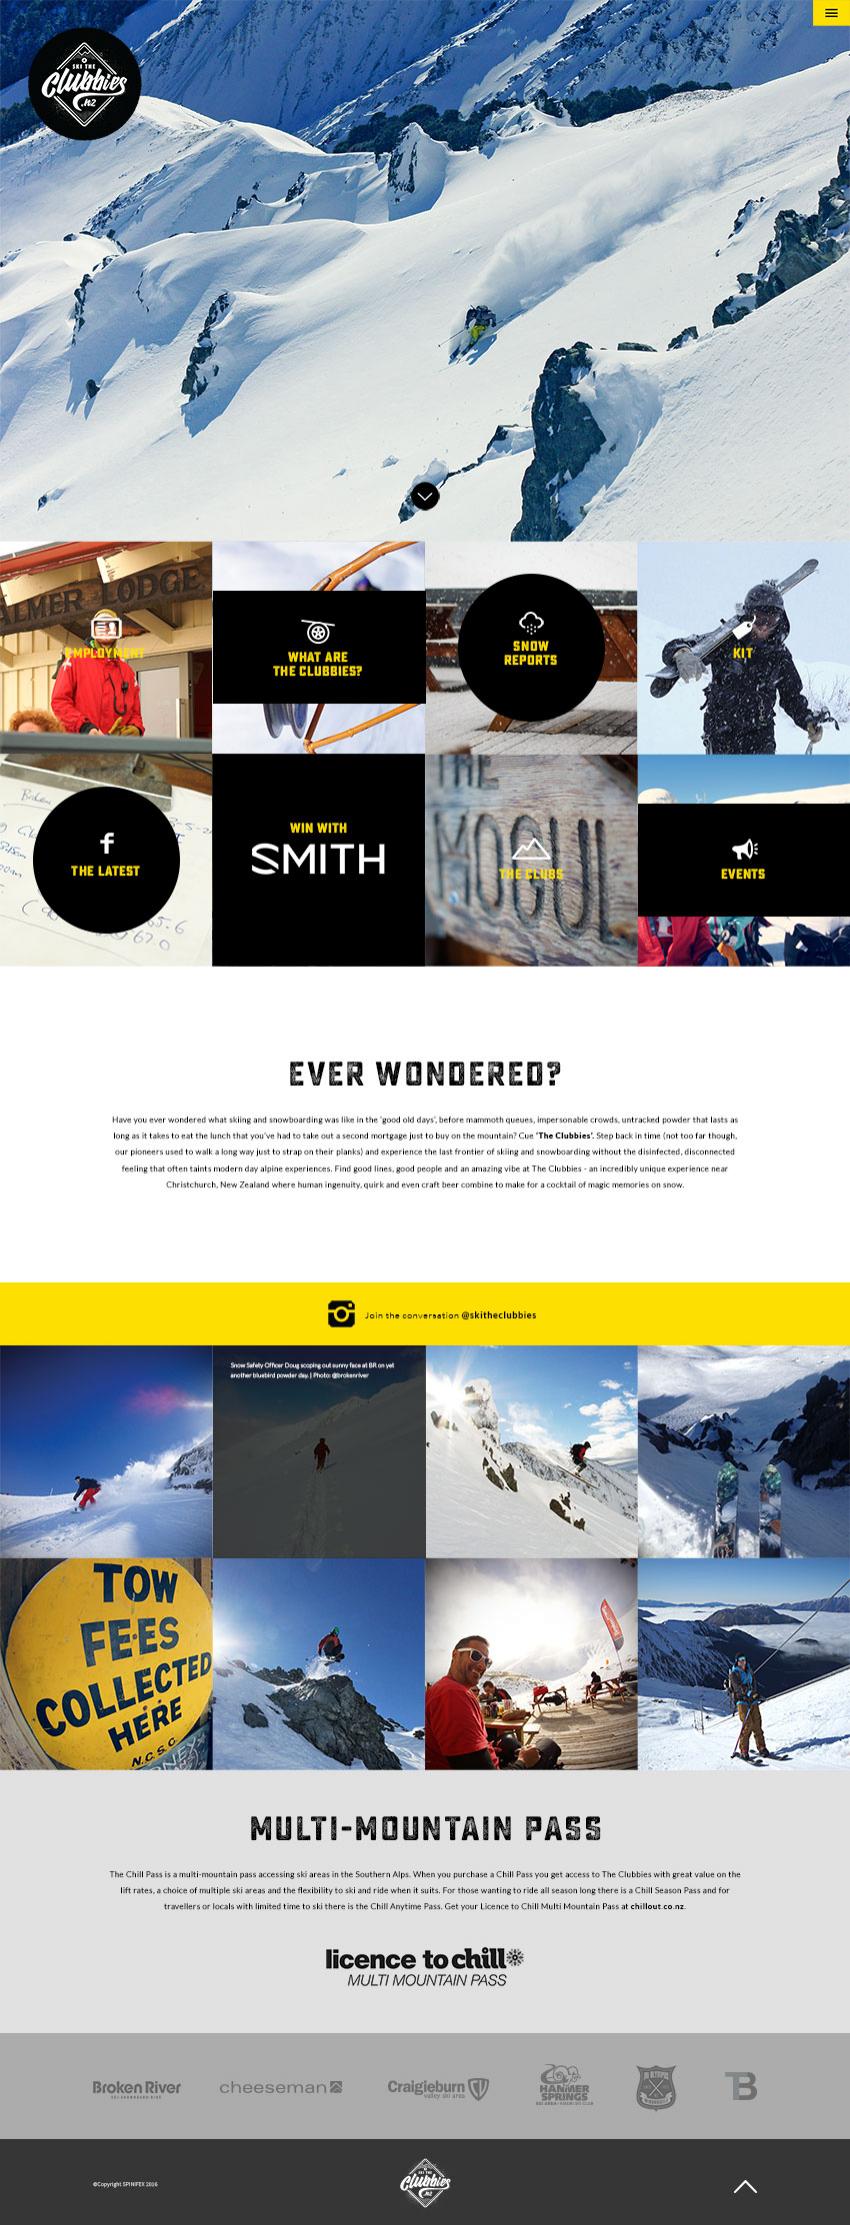 Ski The Clubbies Website Design